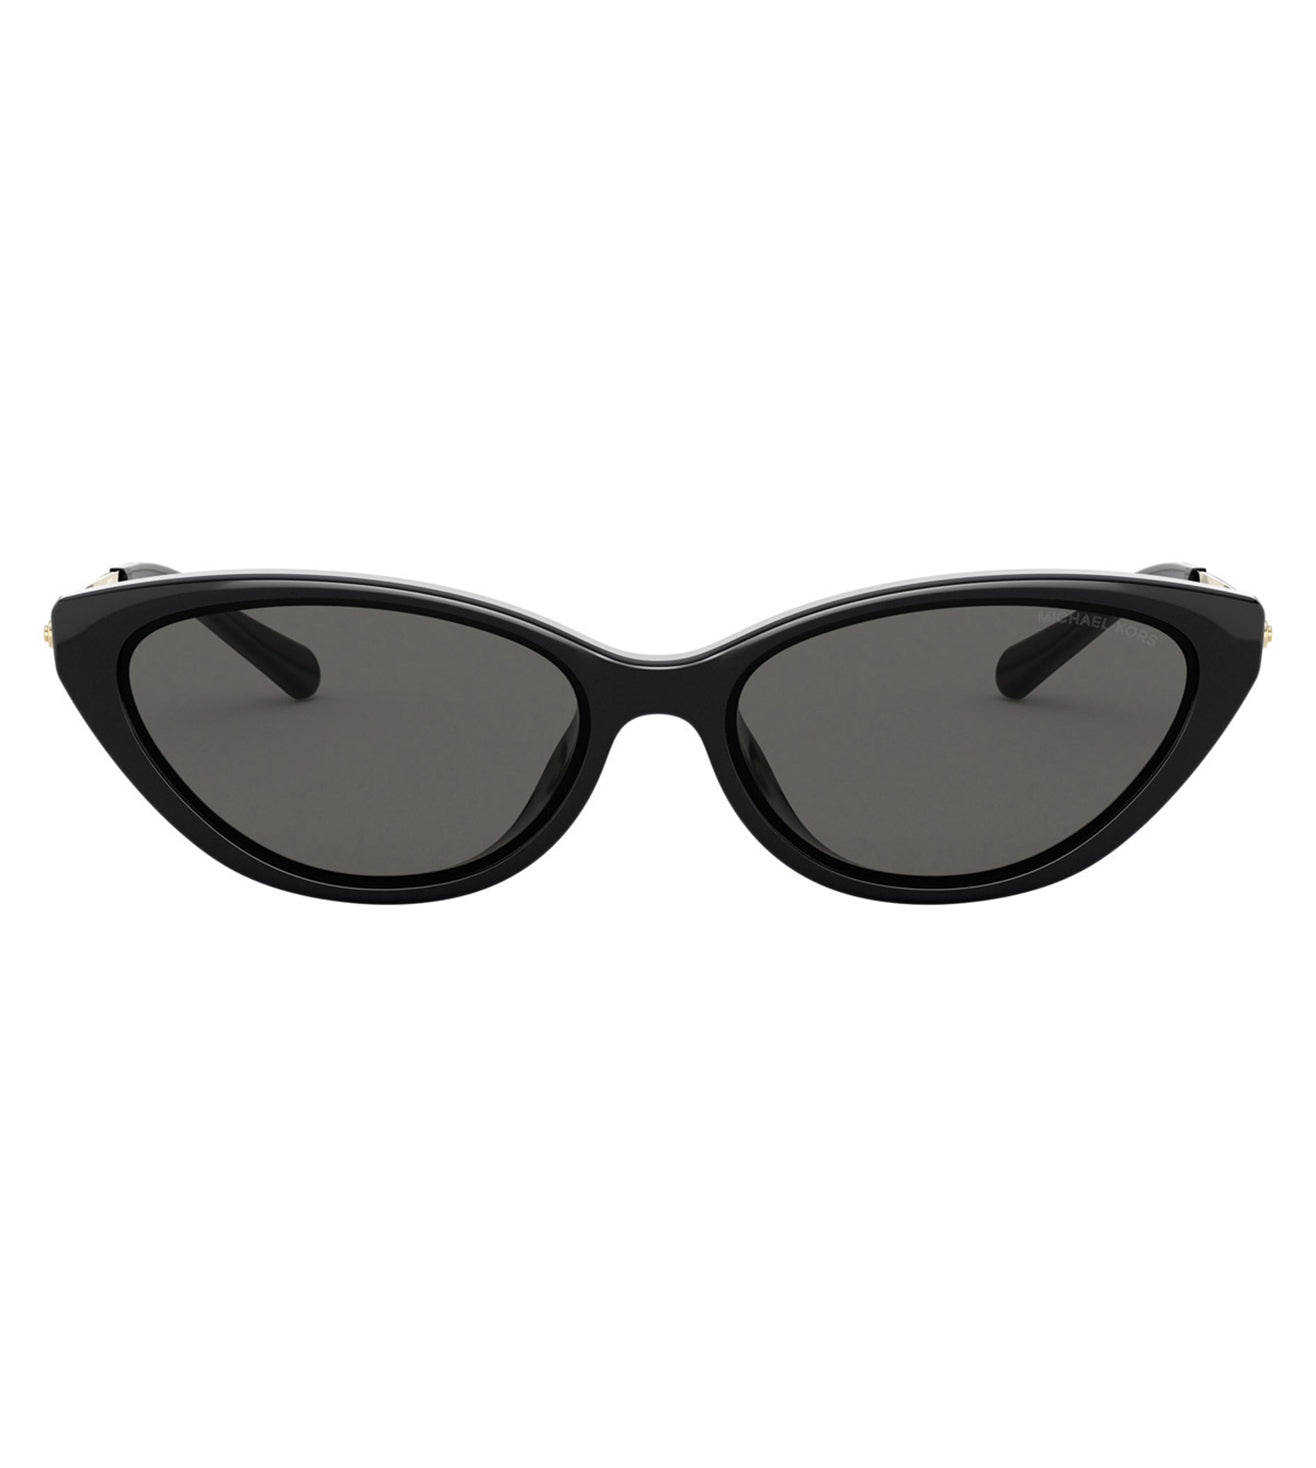 Michael Kors Women's Dark Grey Cat-eye Sunglasses